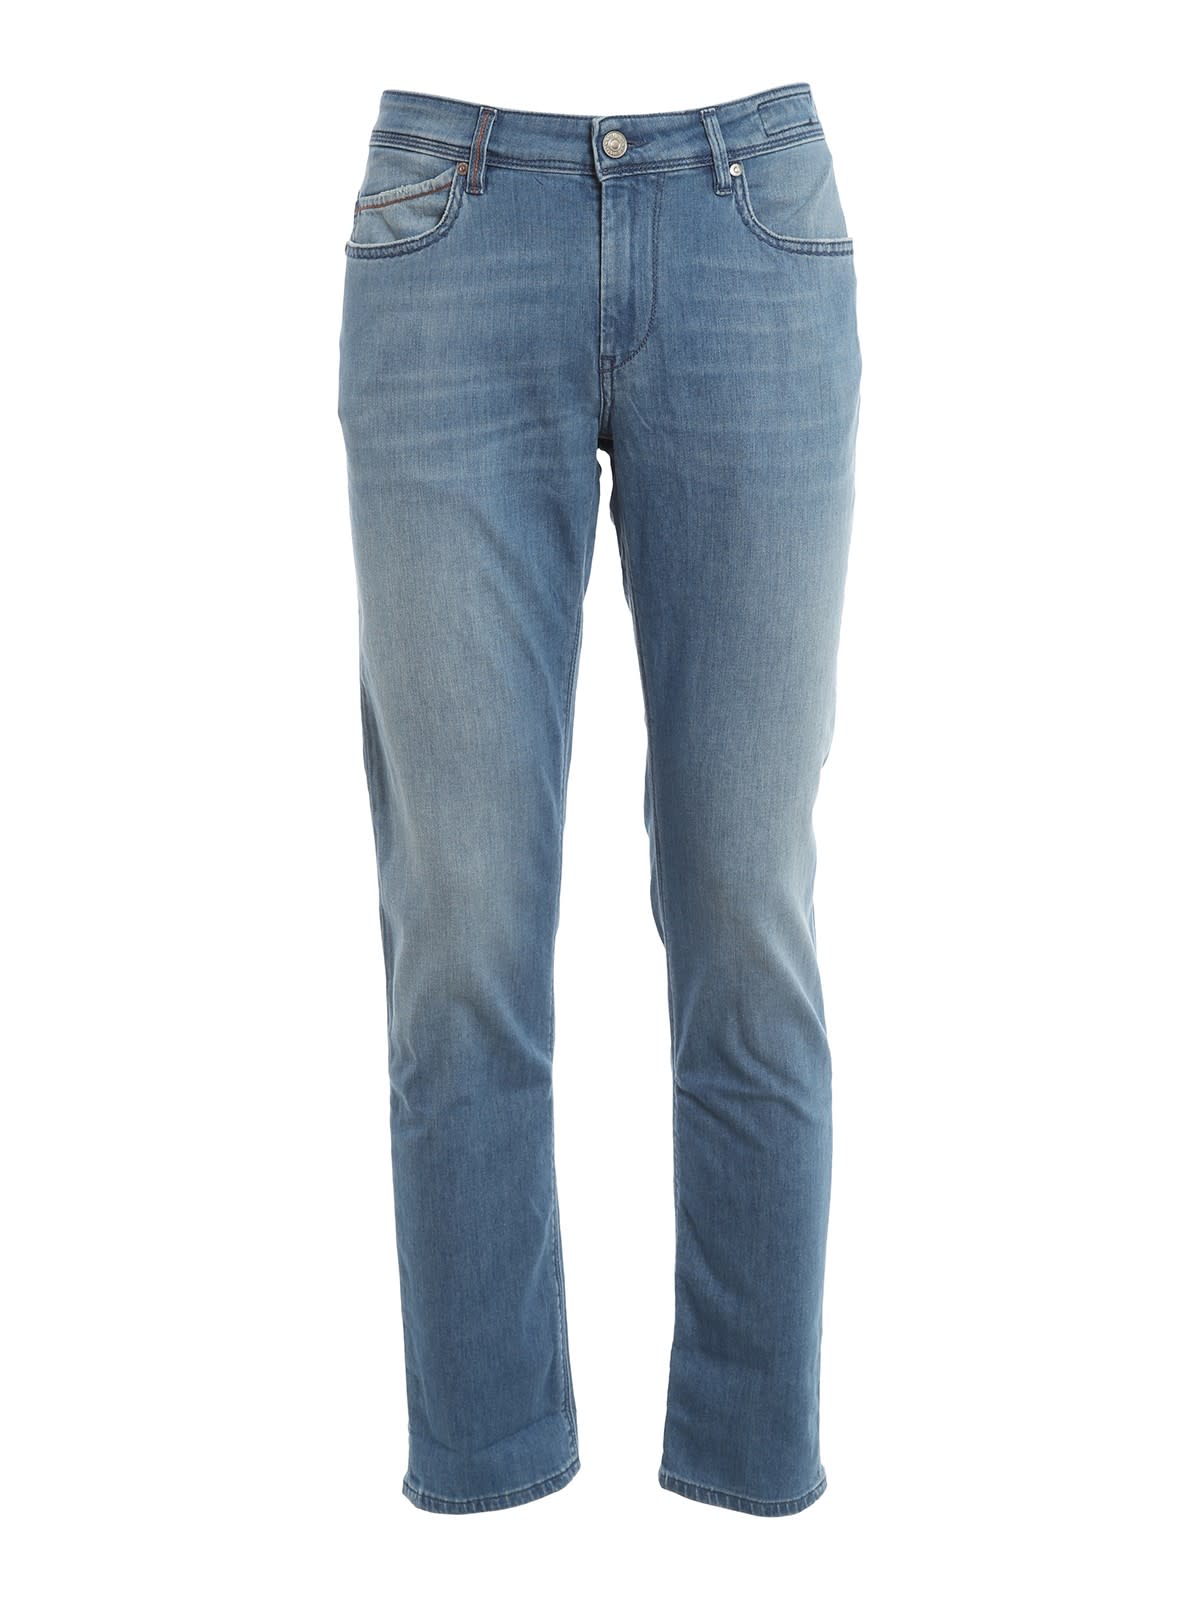 Re-HasH Jeans Rubens Blu P0152697itblue